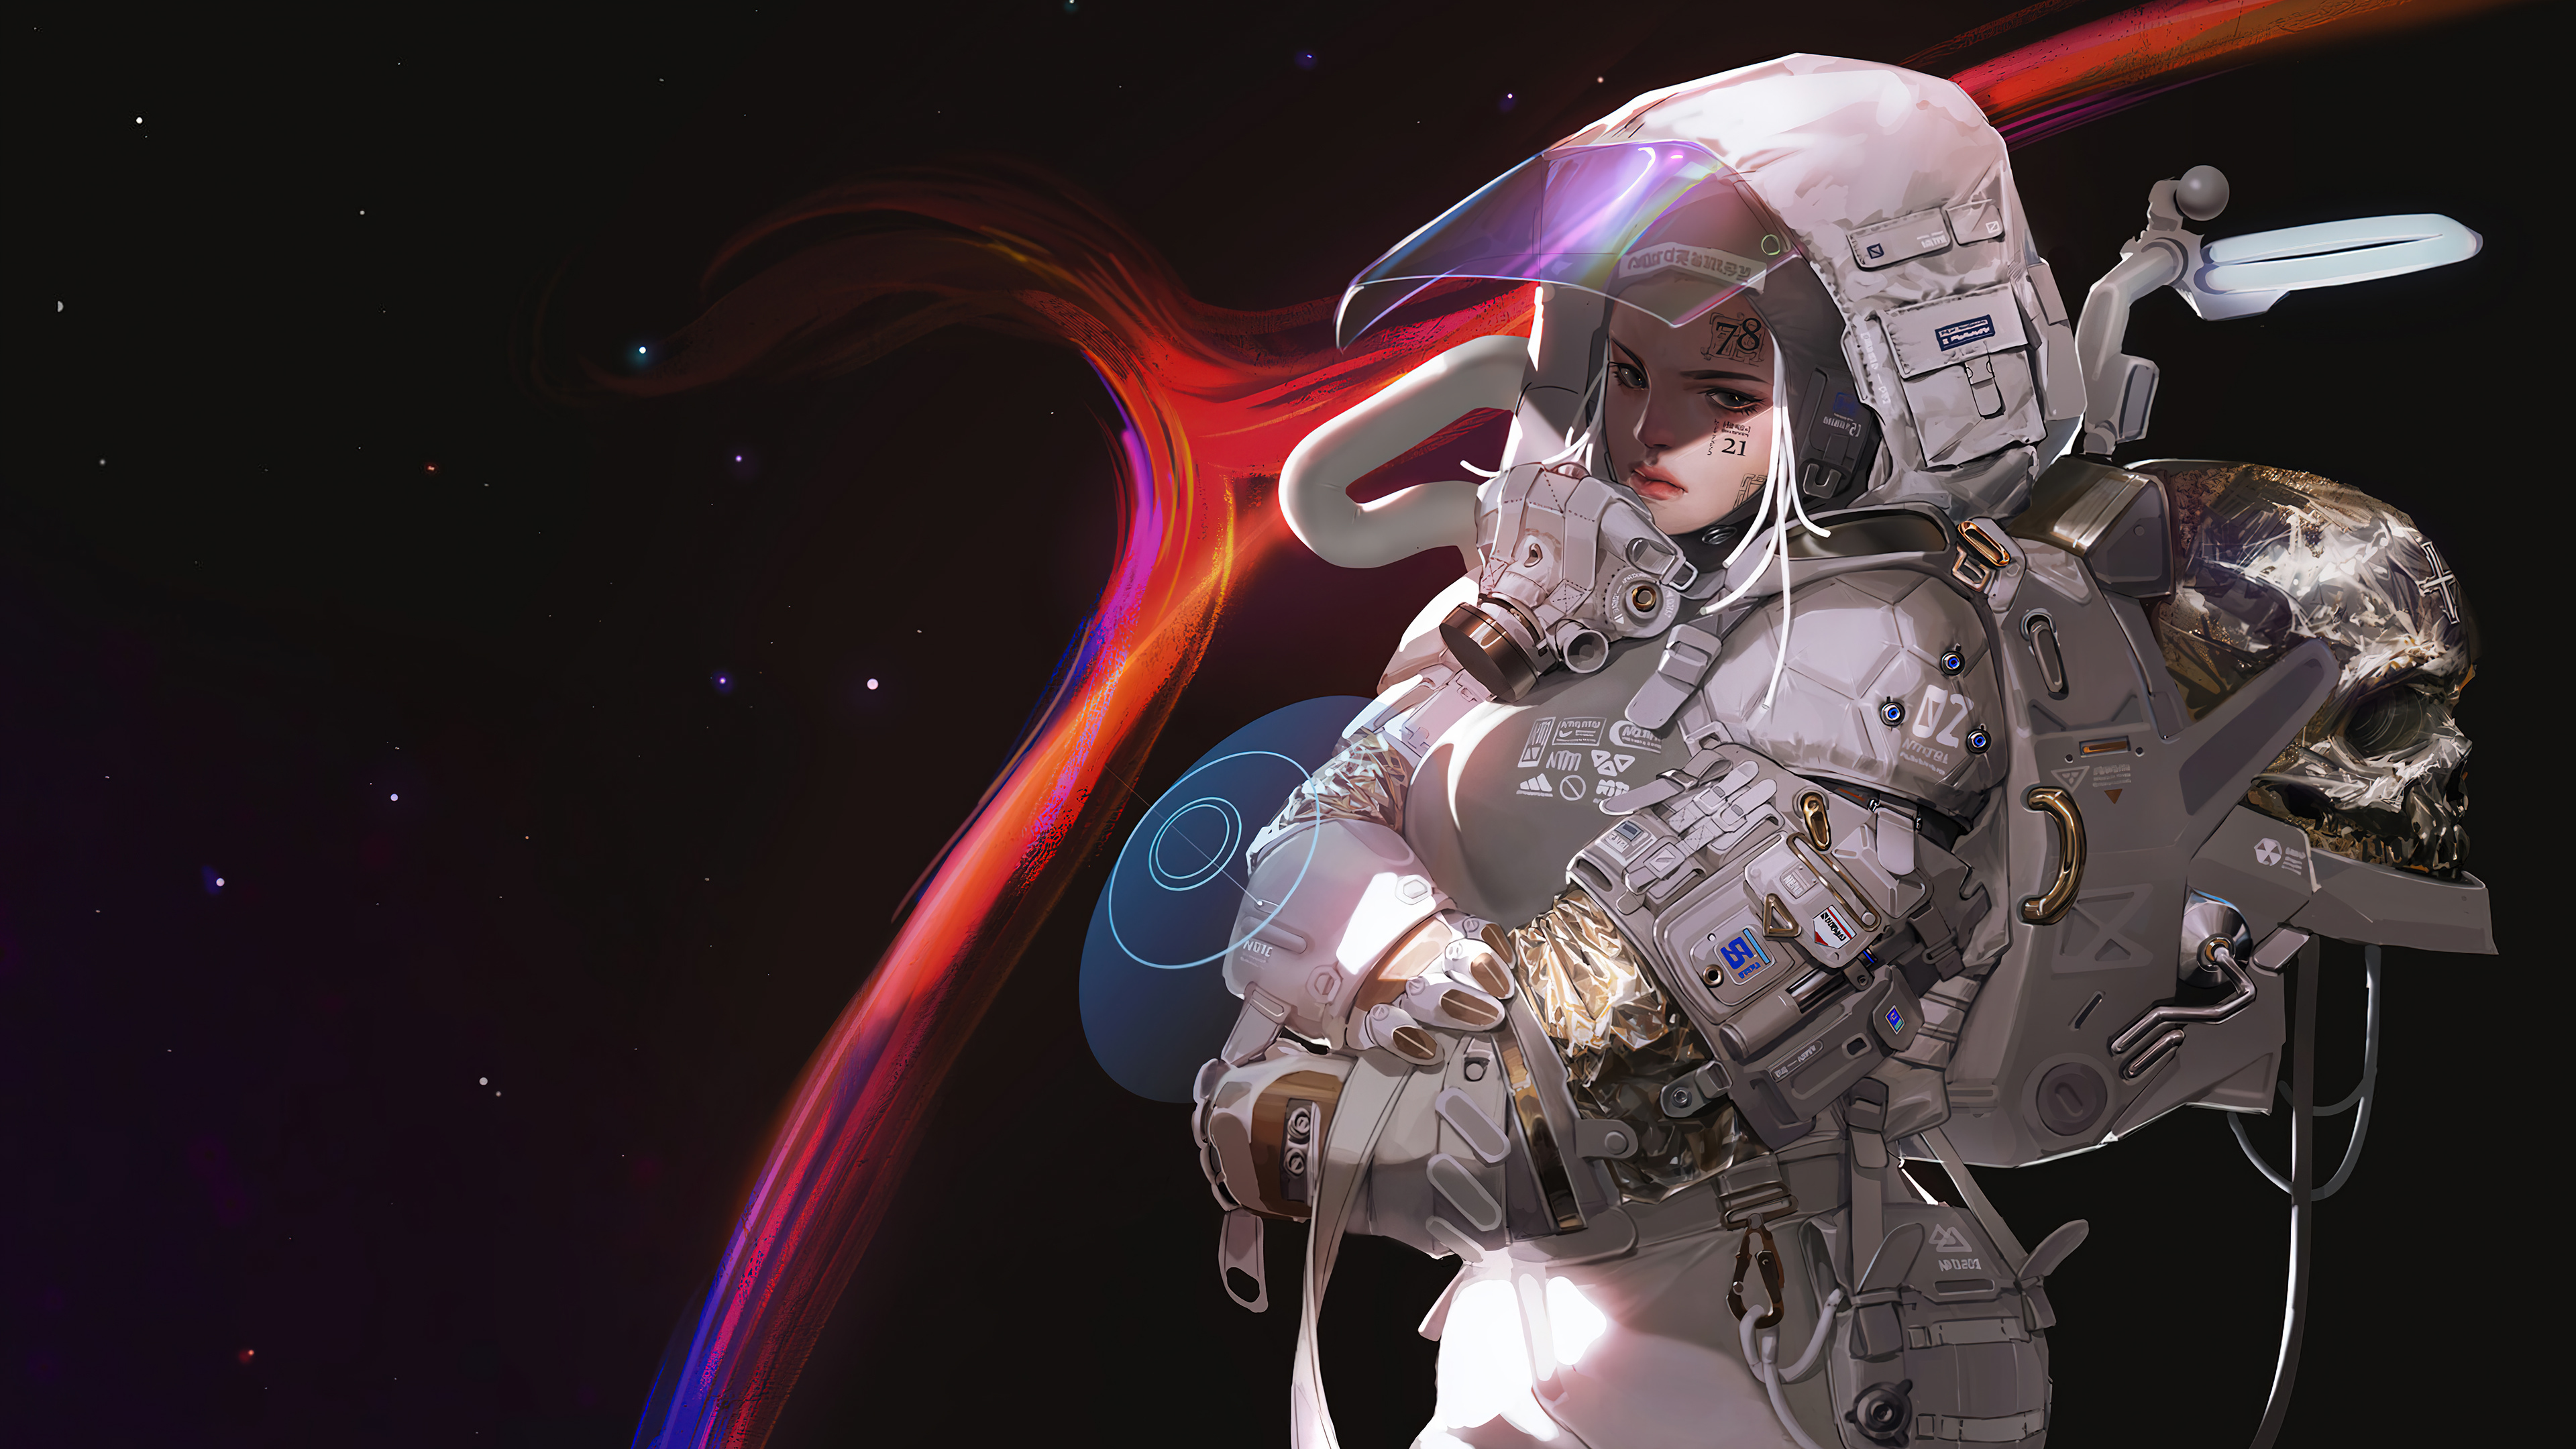 Sci Fi Astronaut 4k Ultra HD Wallpaper by mohamedsaberartist